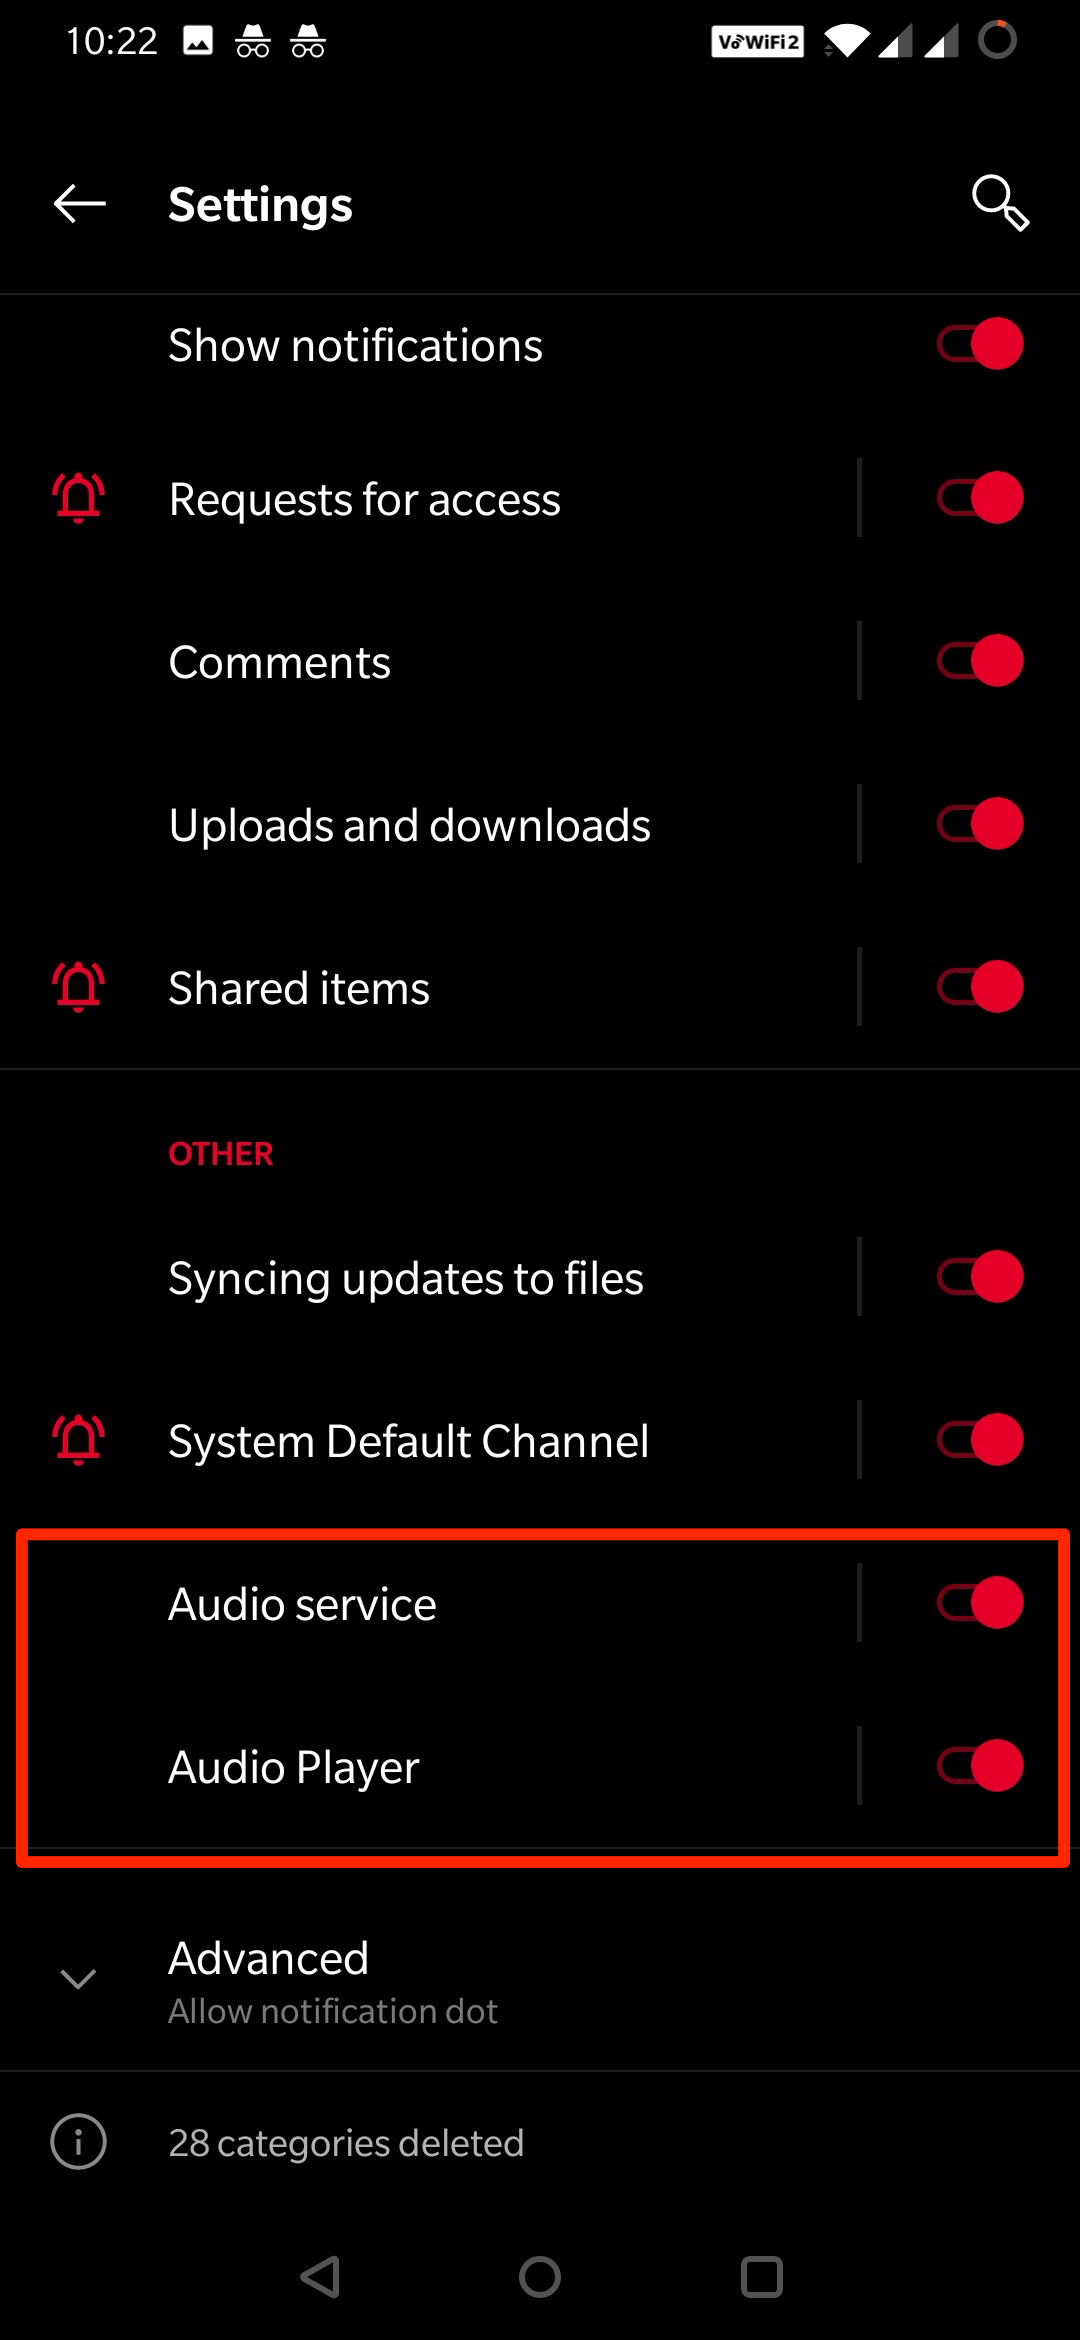 Turn_OFF_Audio_Service_Notification